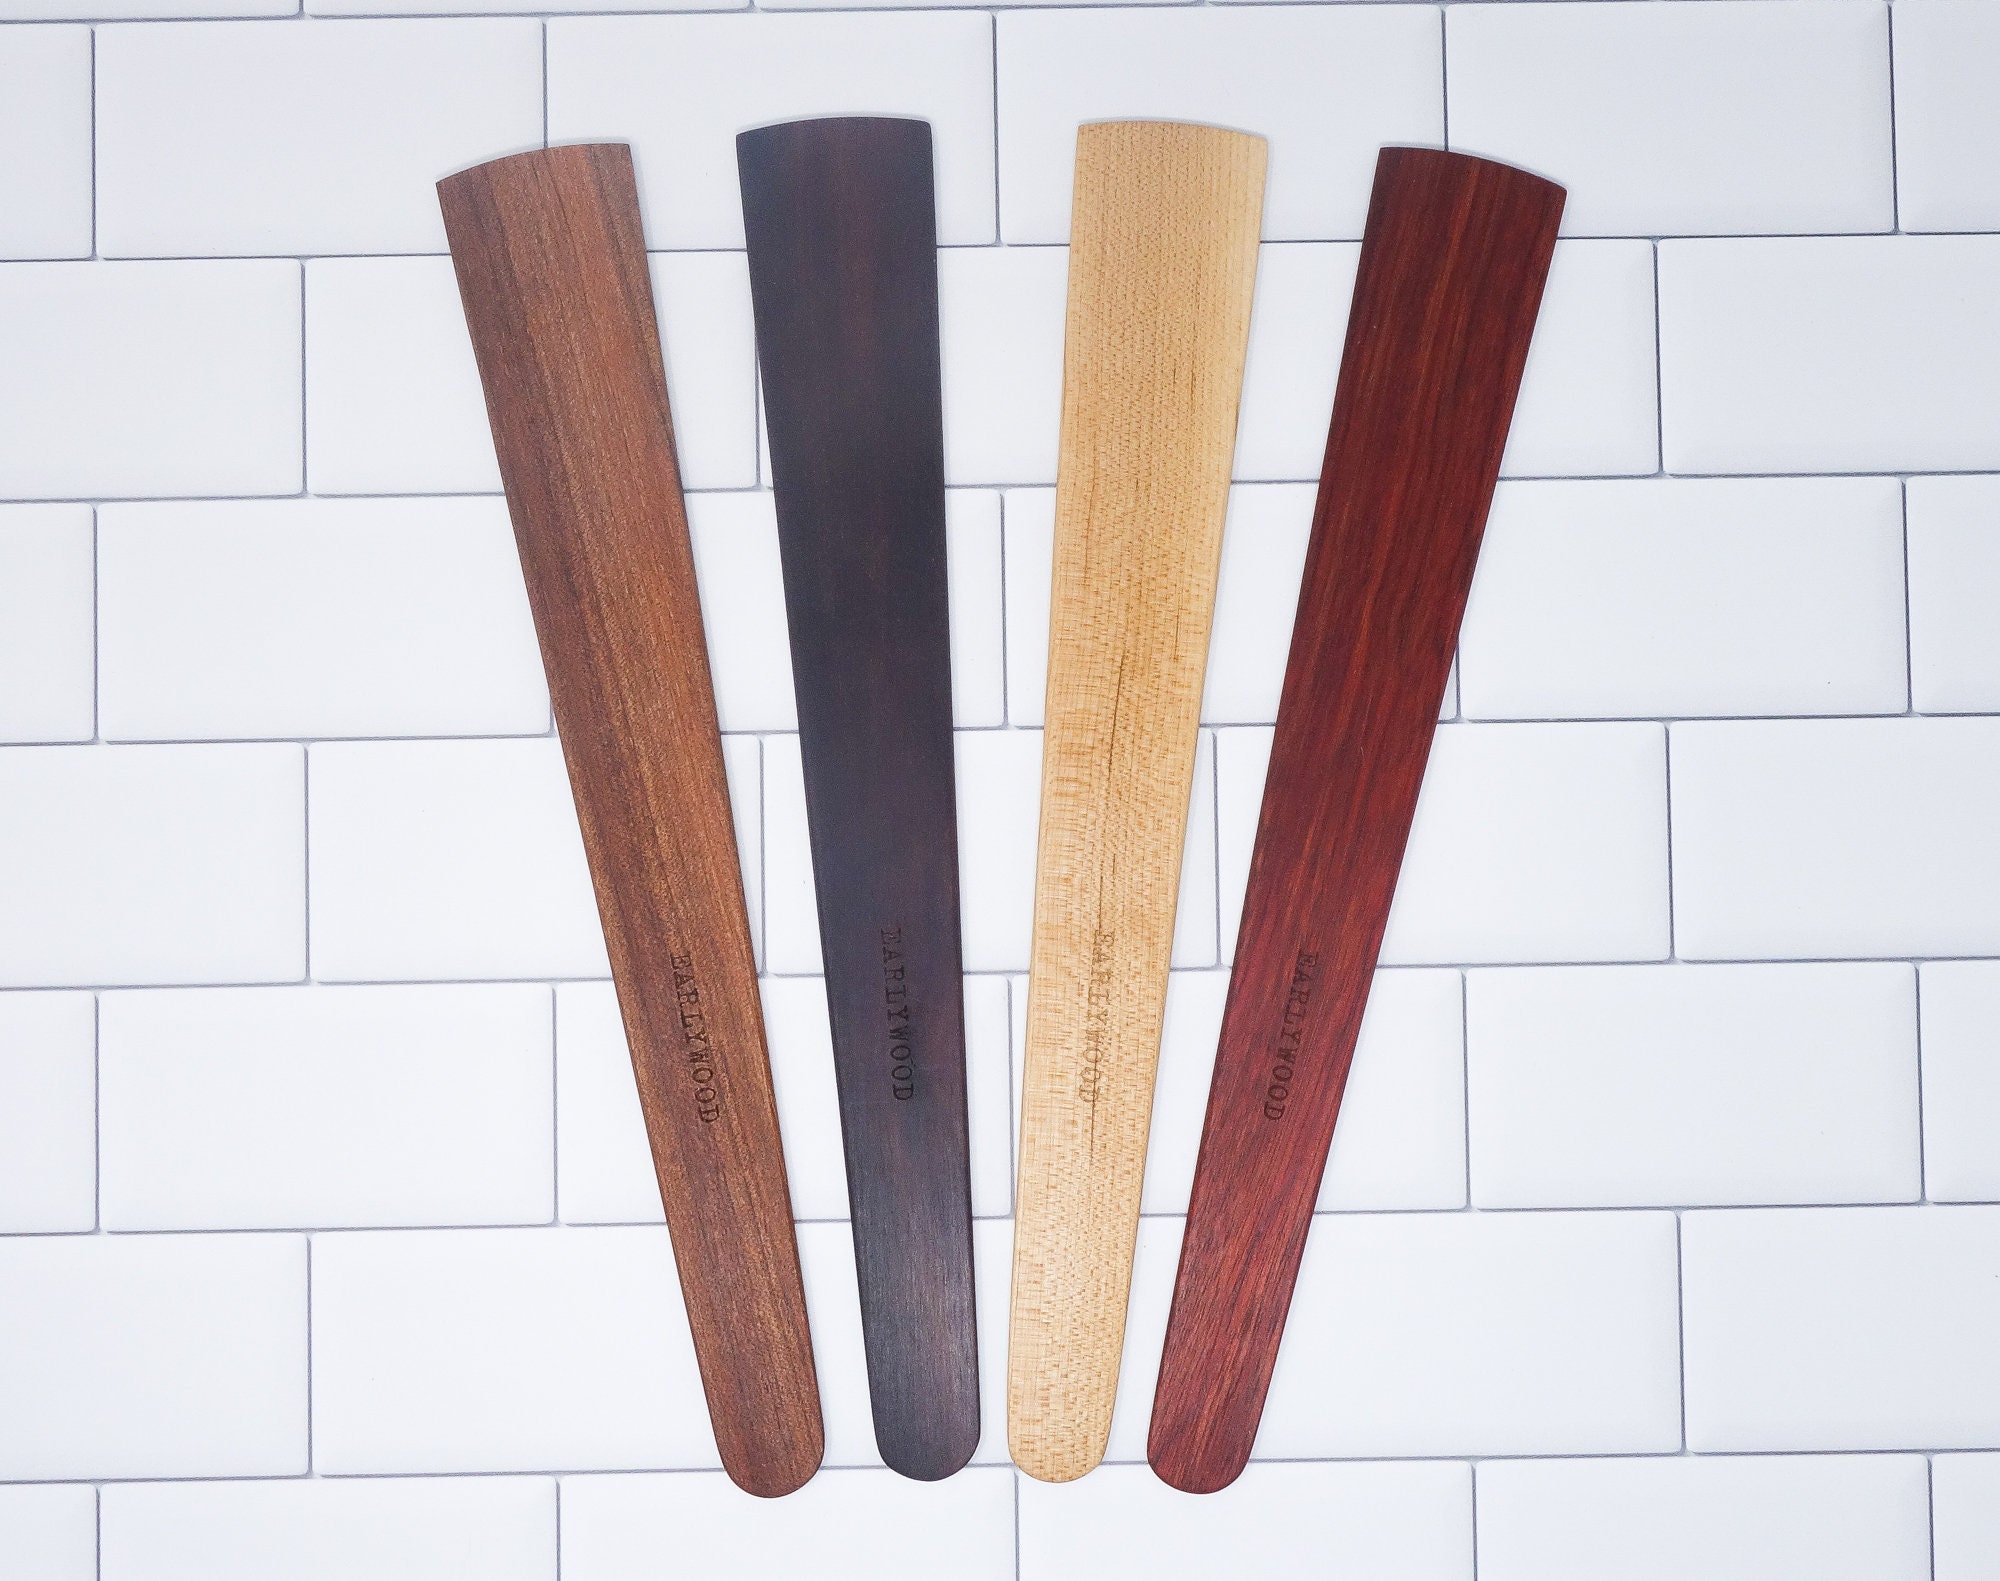 small wooden spatula - Earlywood